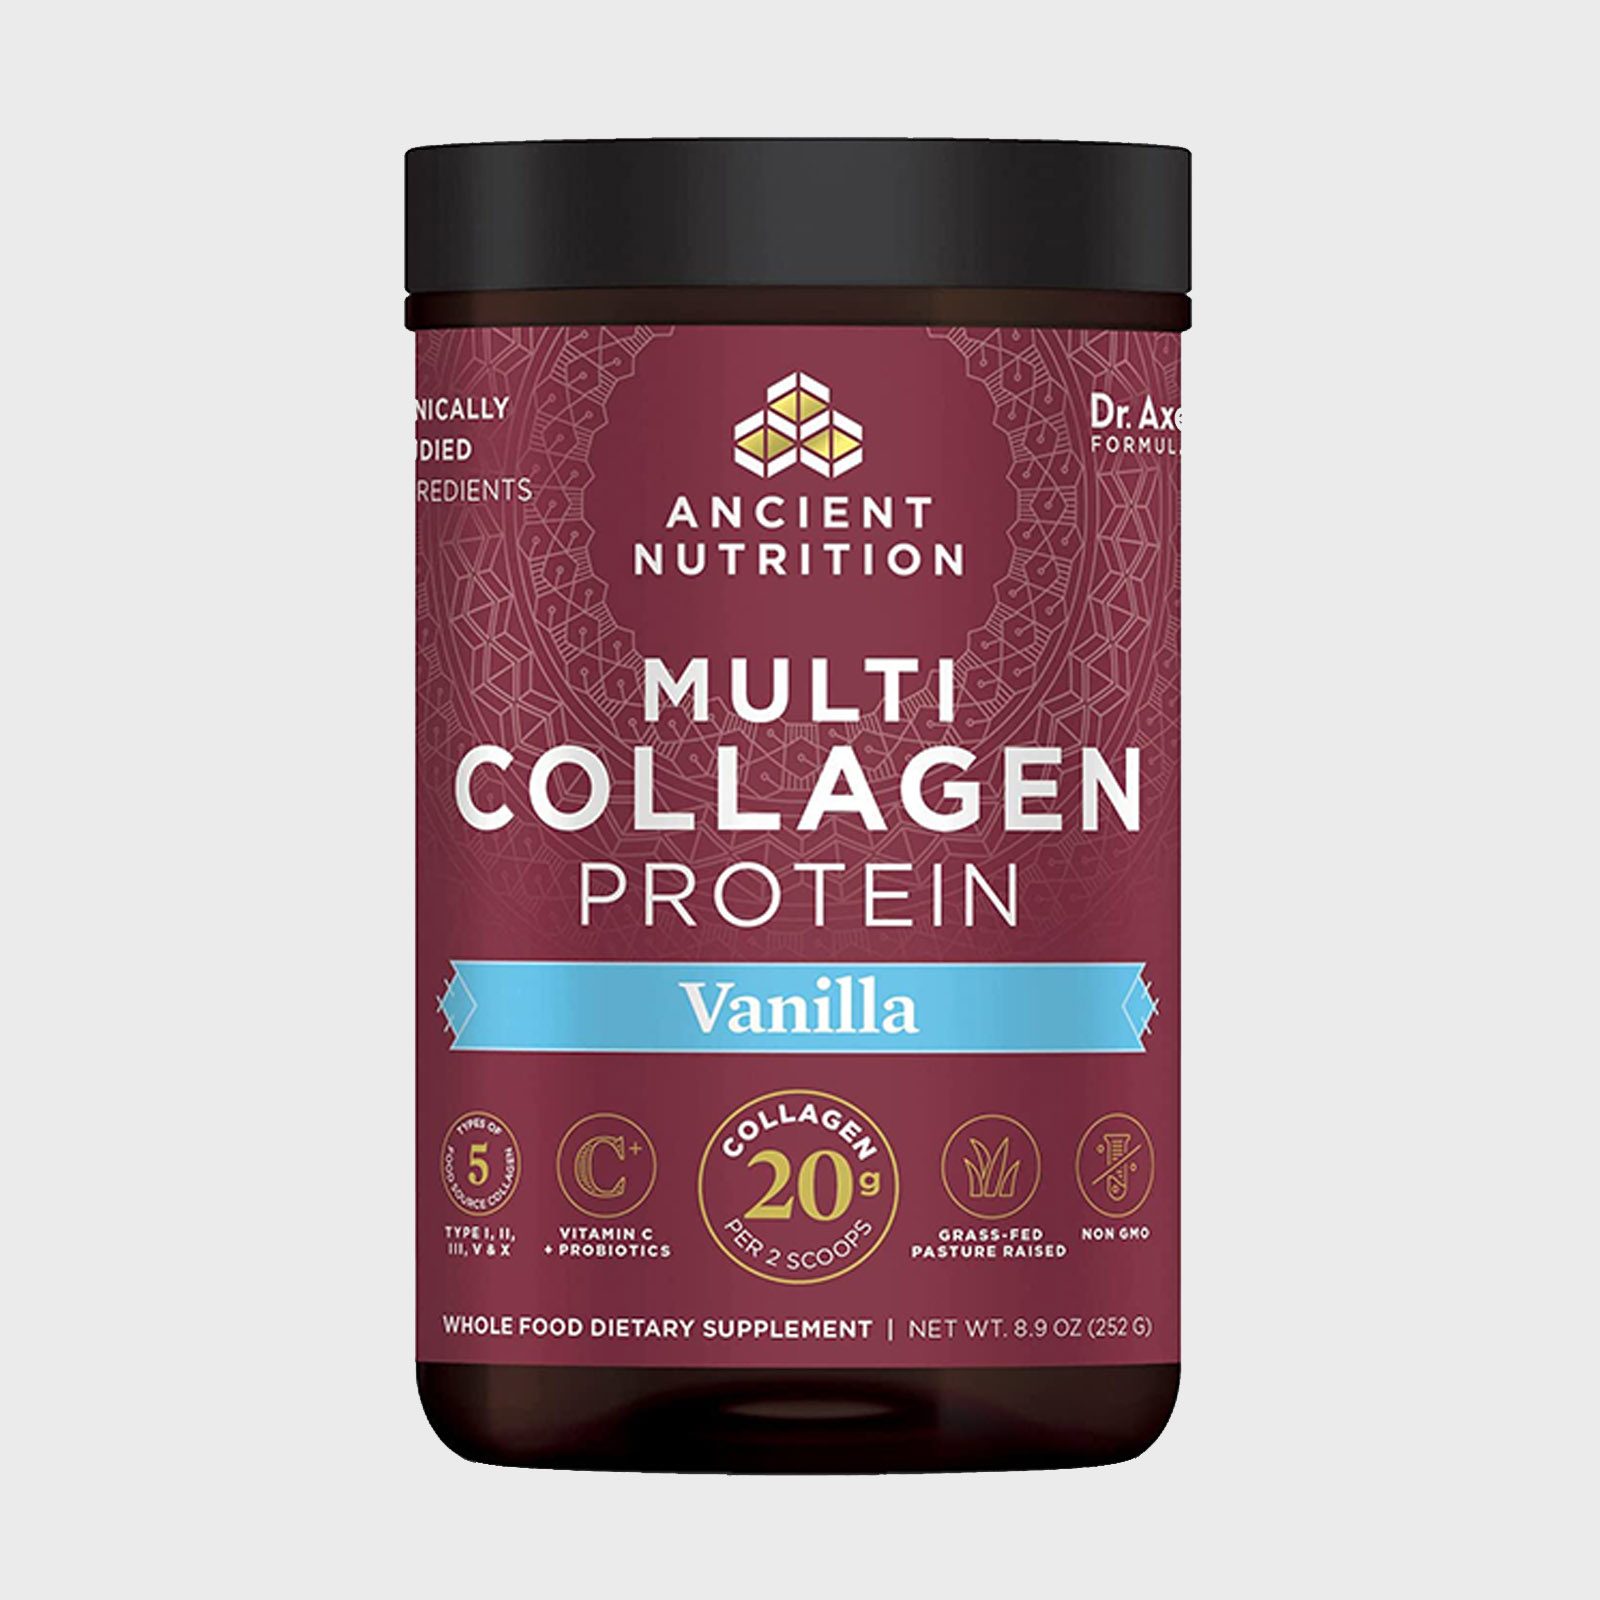 Ancient Nutrition Multi Collagen Protein Via Amazon